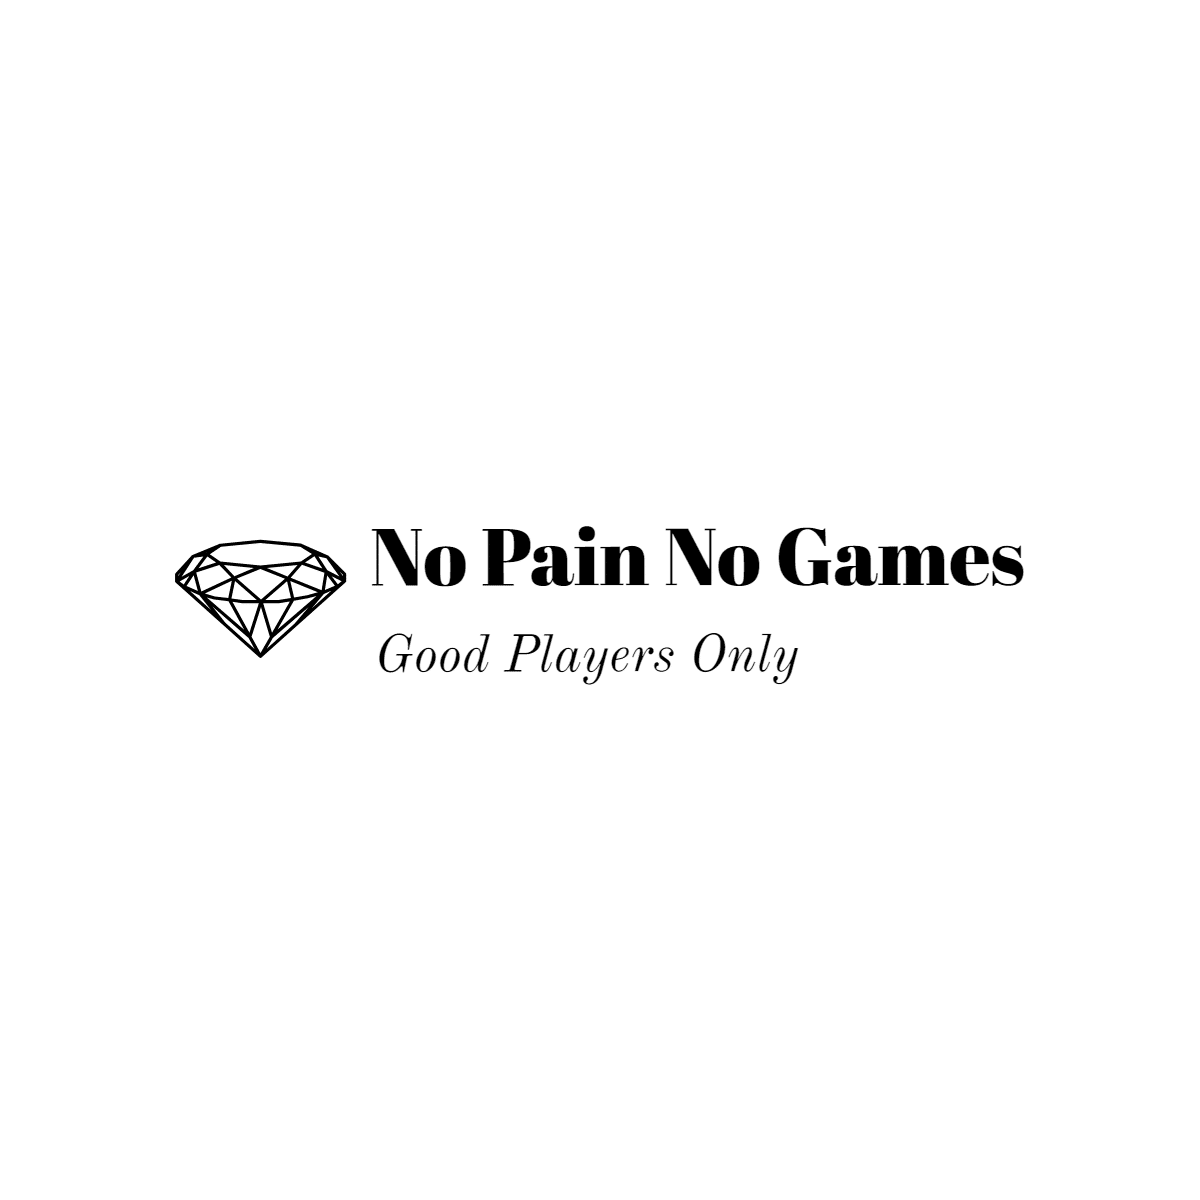 No Pain No Games logos black